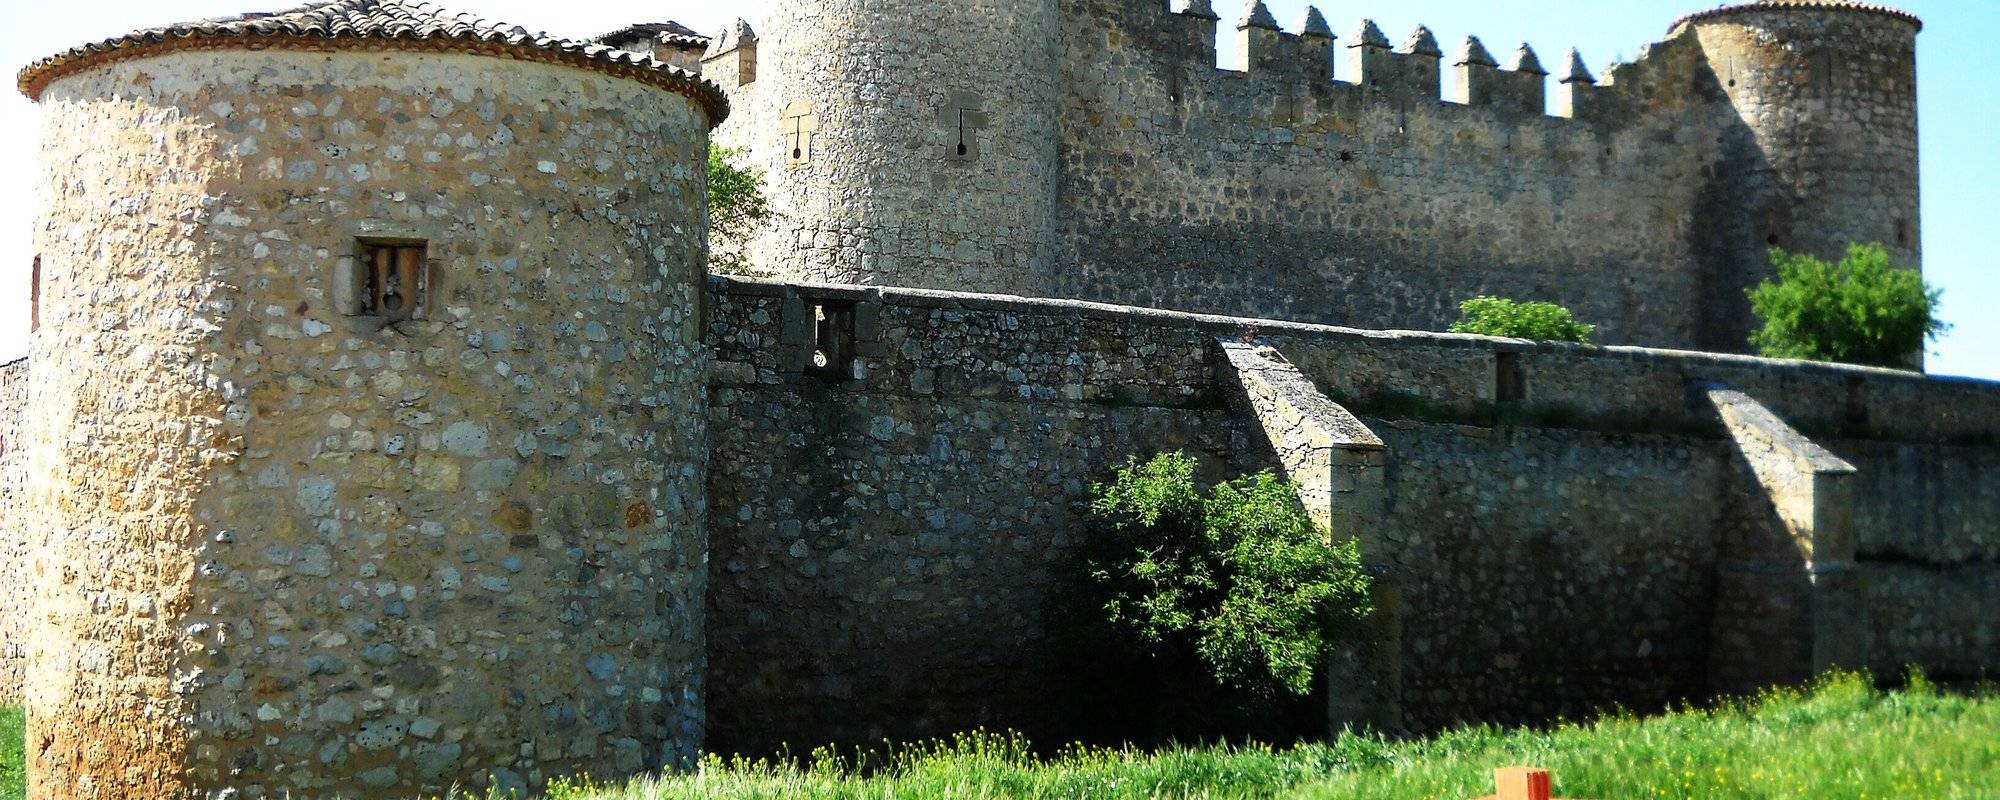 Art, Travel and Culture: Almenar and the castle birthplace of Leonor, wife of Antonio Machado